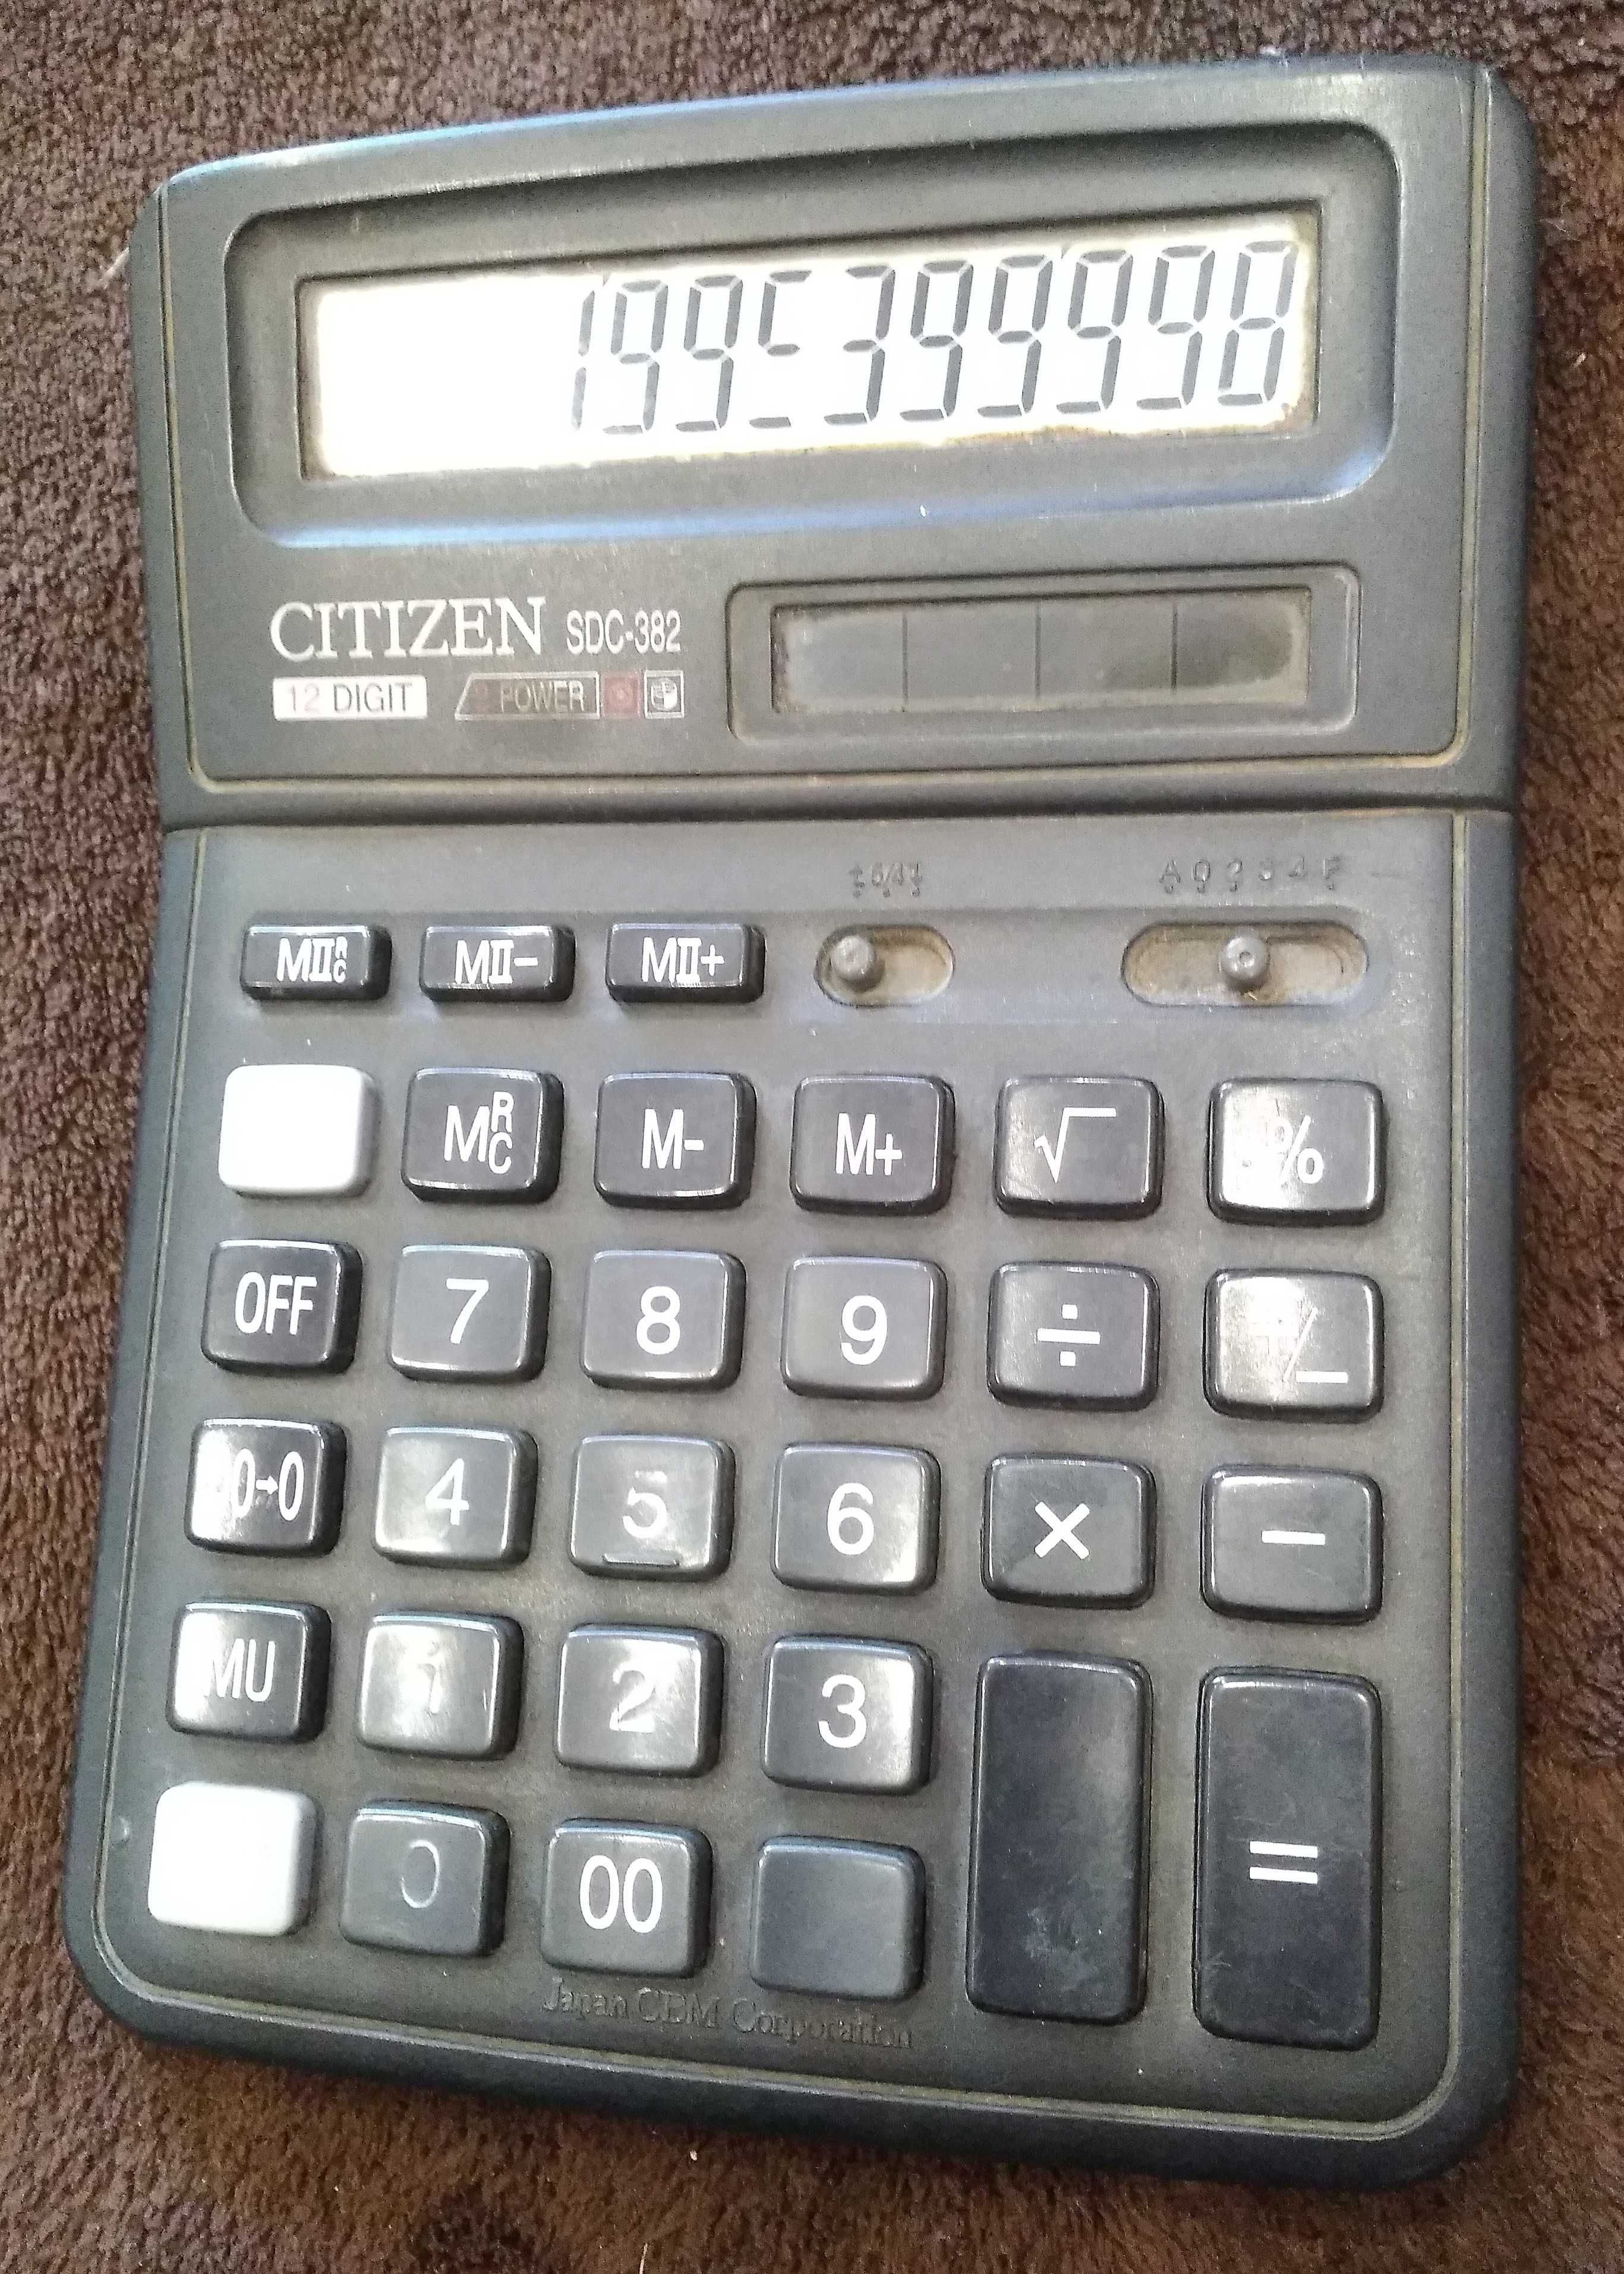 евм citizen sdc 382 счетная машинка